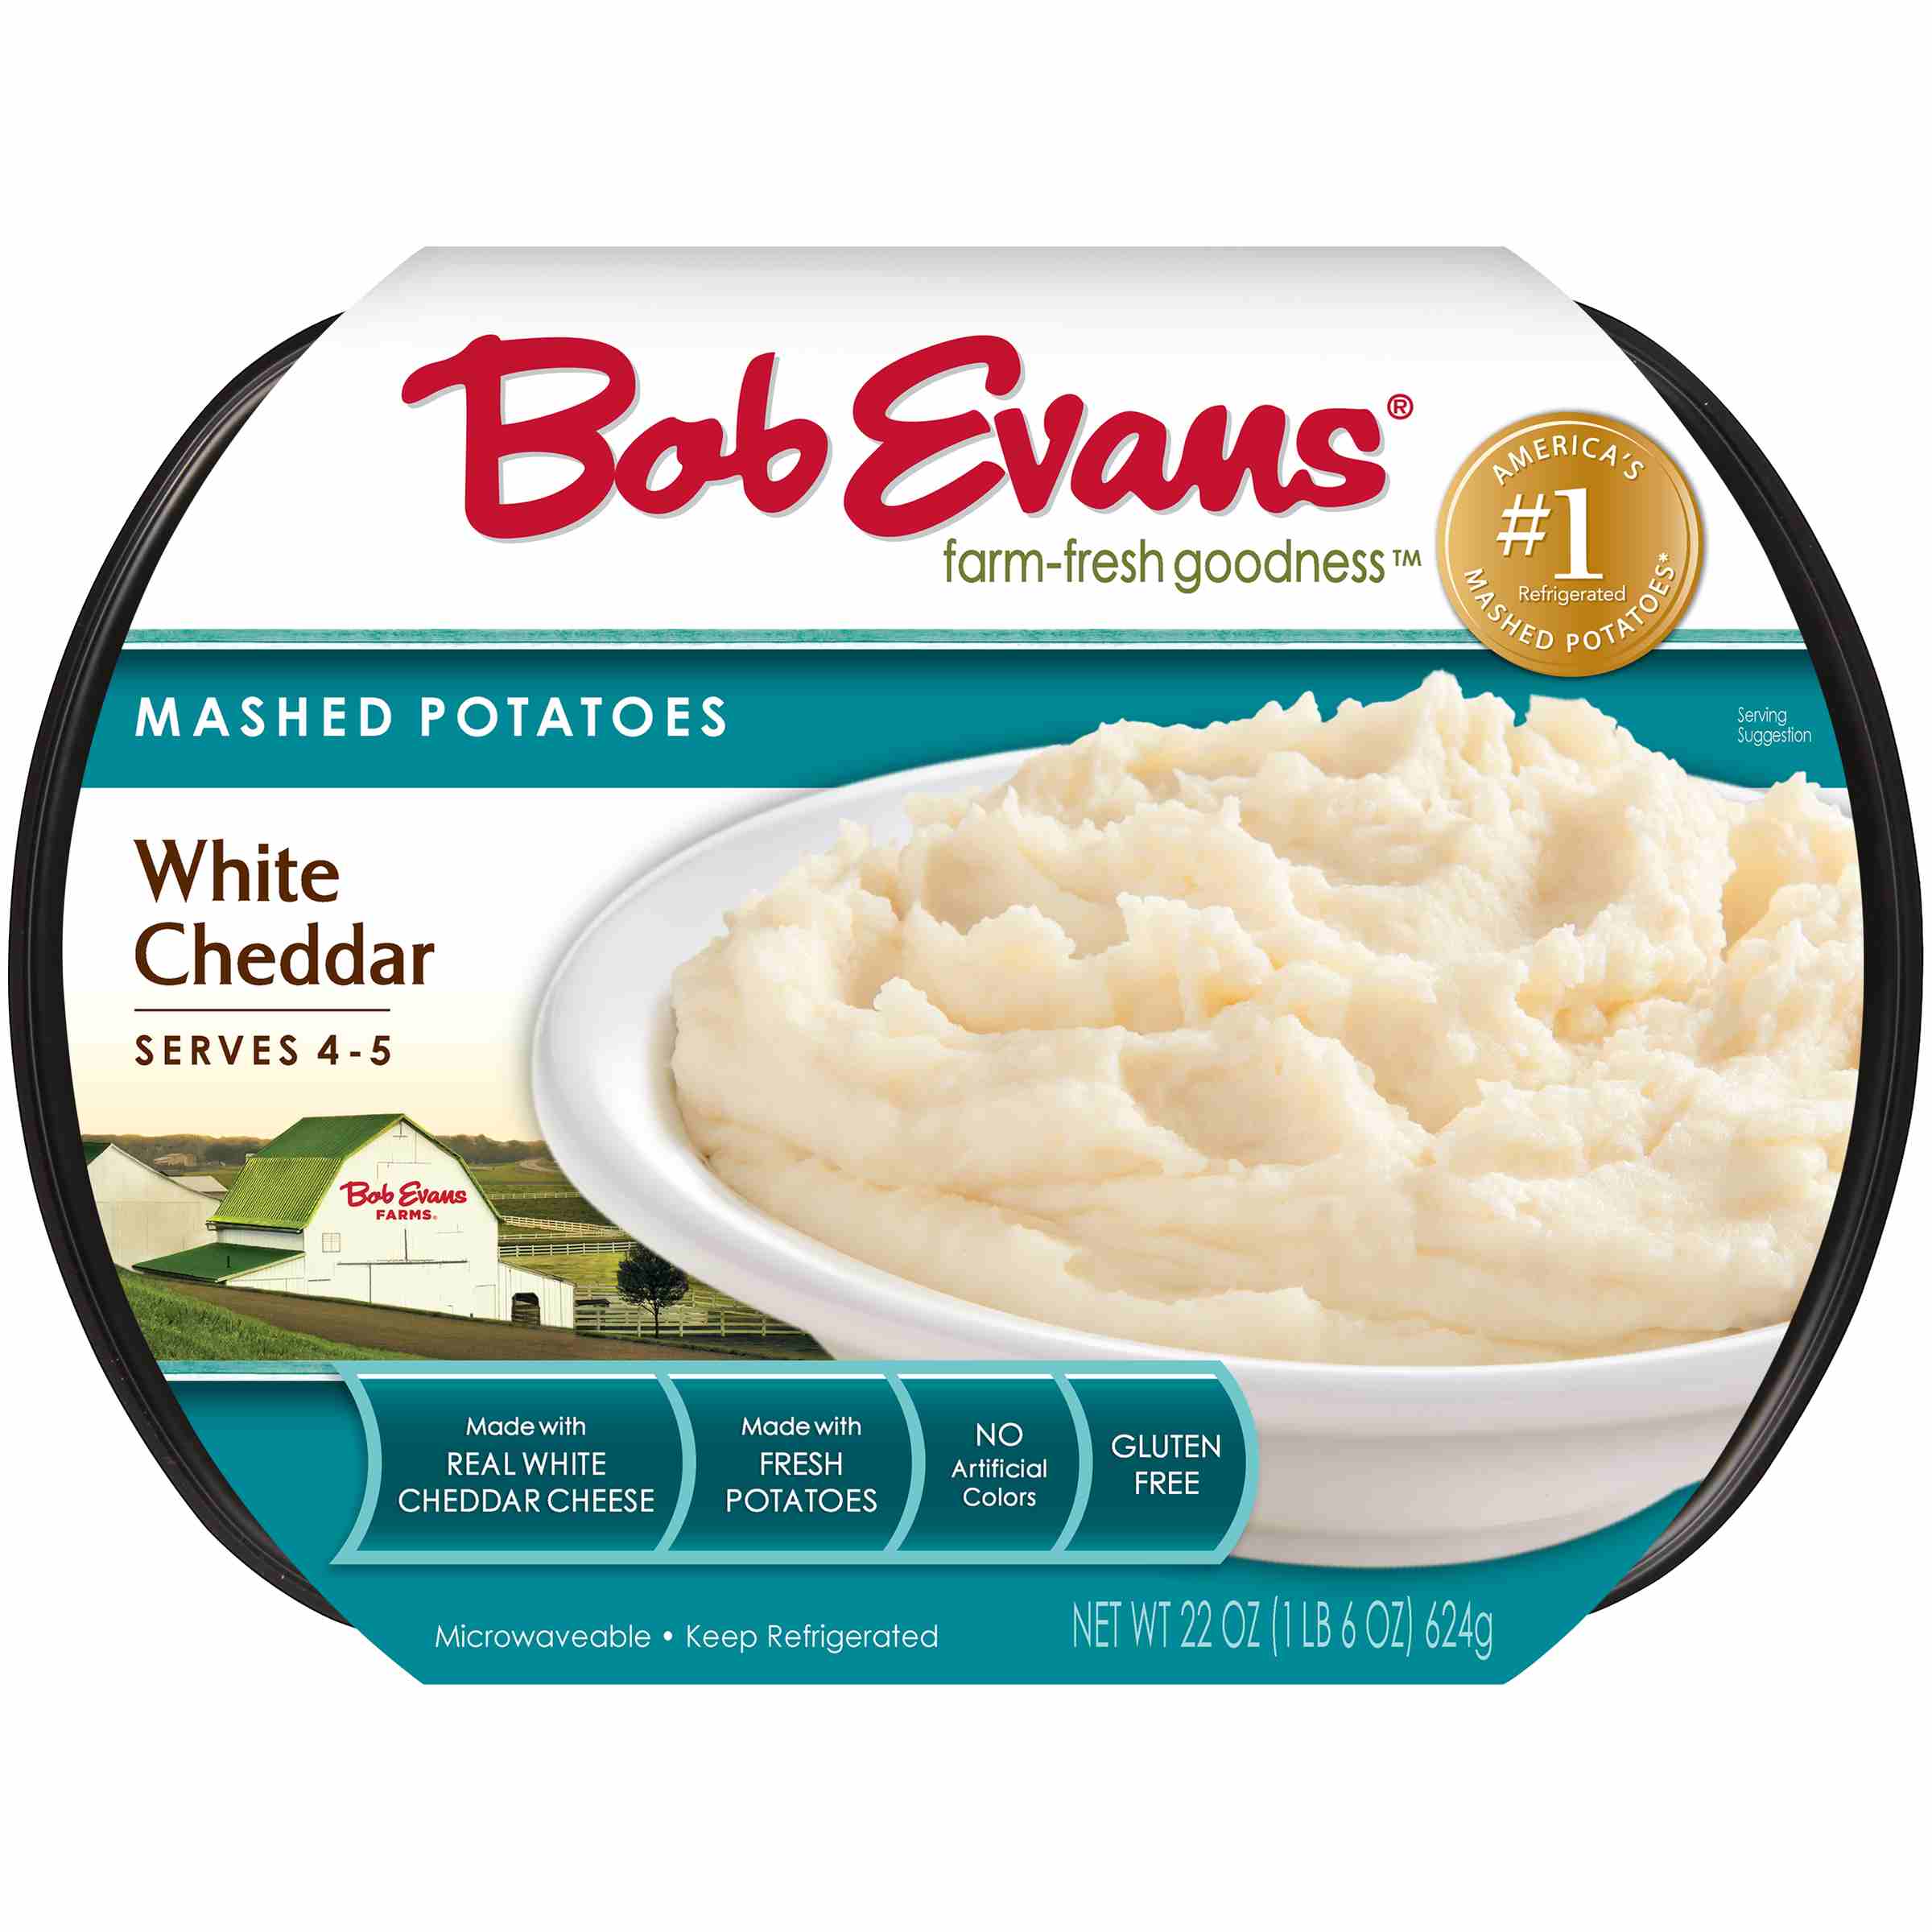 Bob Evans Mashed Potatoes [Nutrition, Ingredients, Recipe]